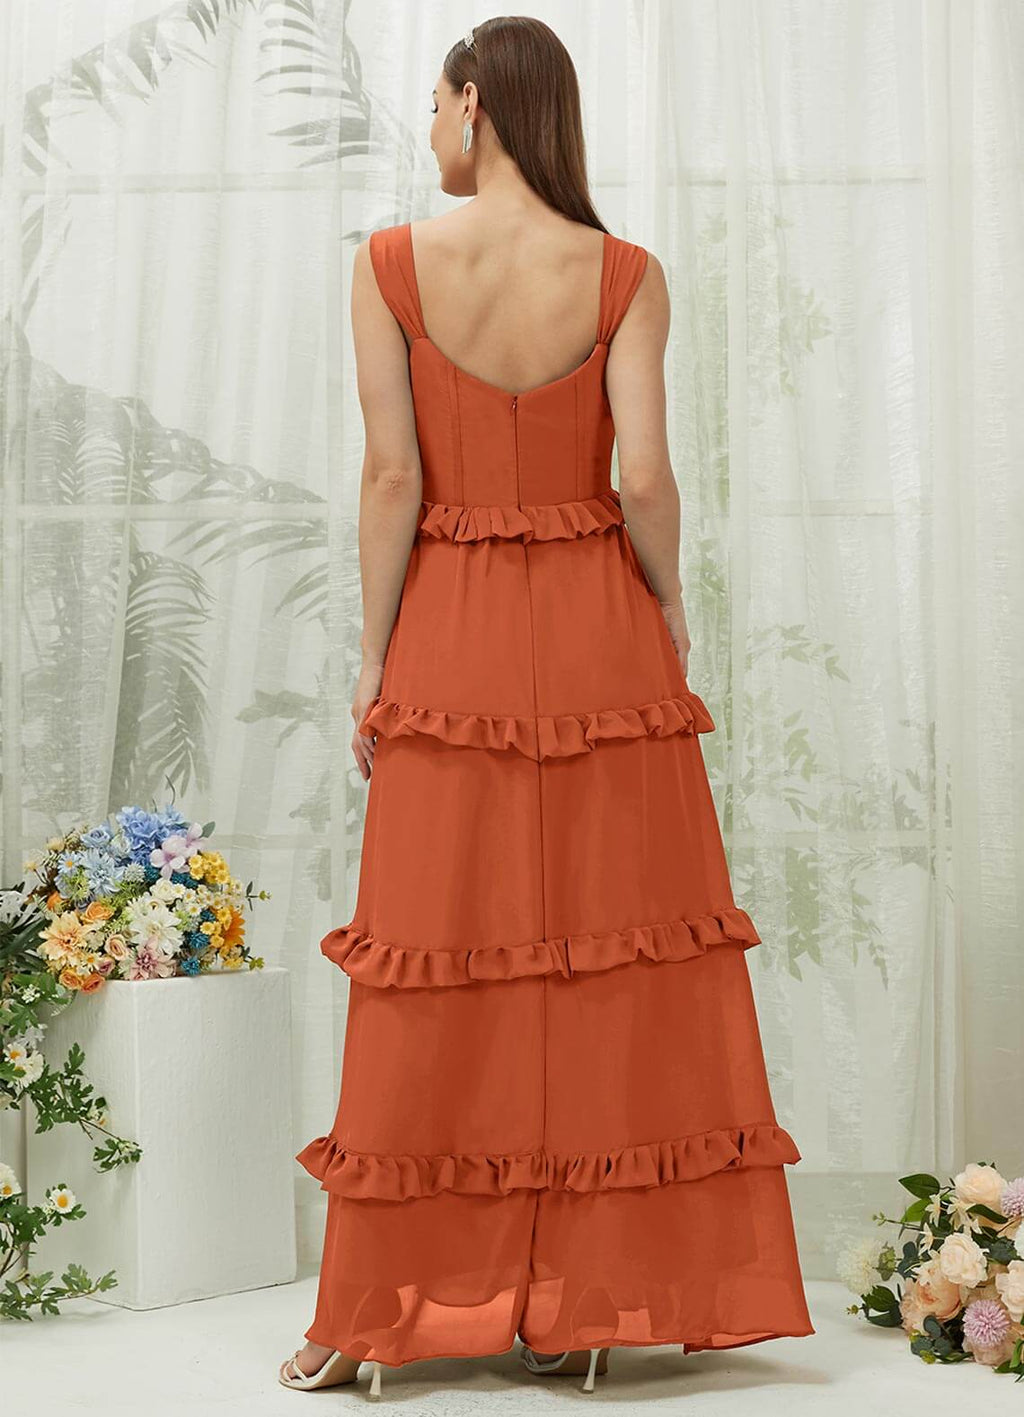 NZ Bridal Burnt Orange Straps Chiffon bridesmaid dresses R3701 Sloane a